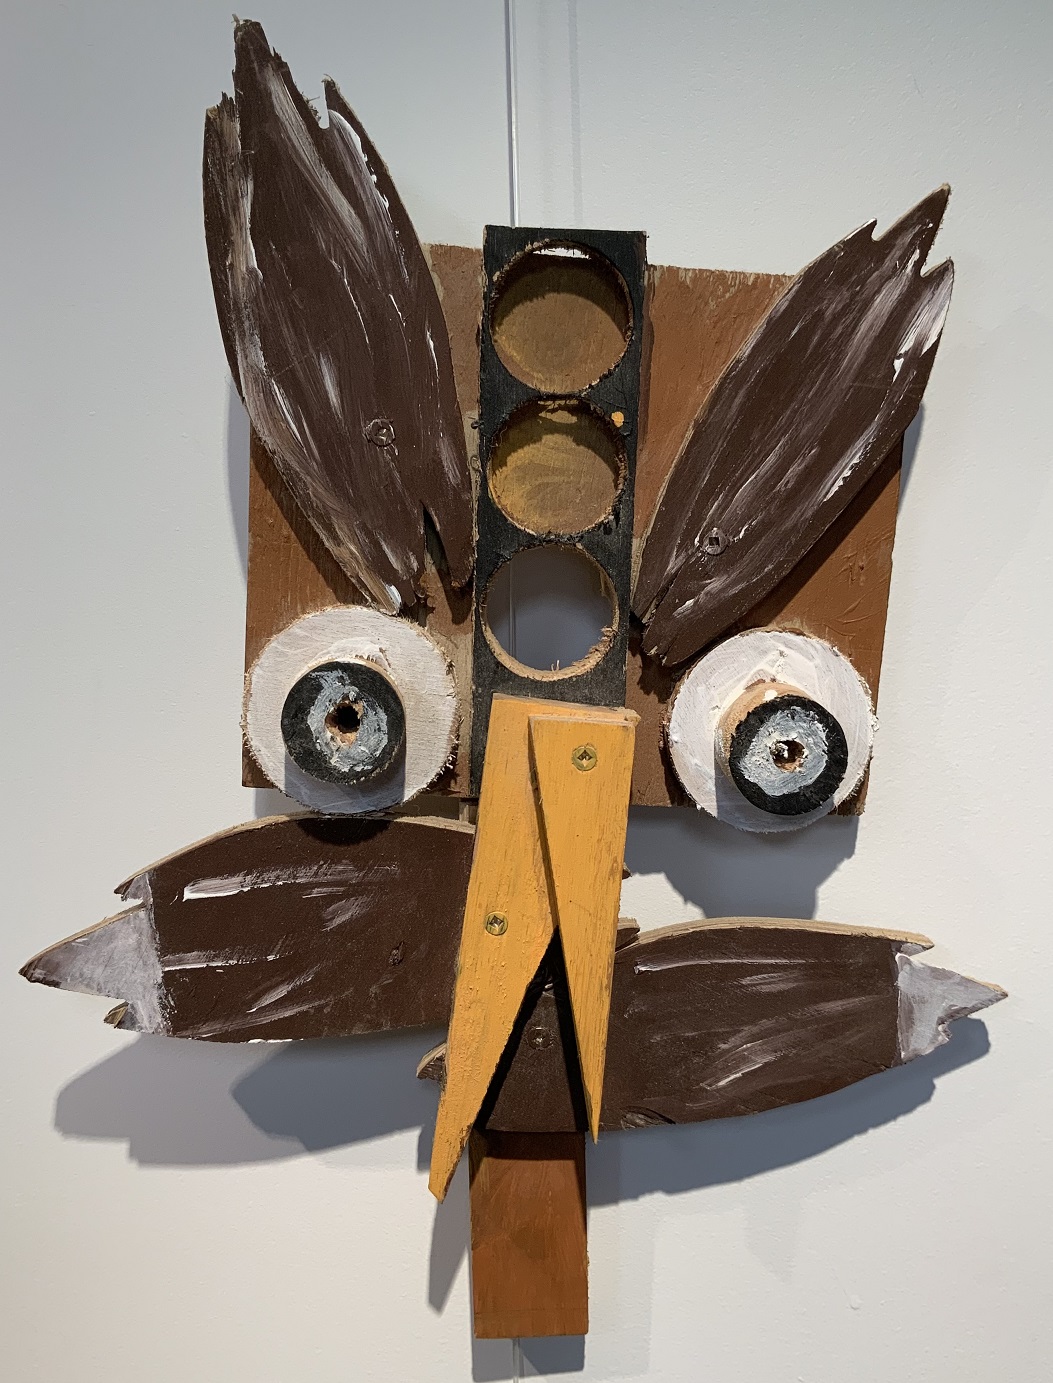 "Owl" by Harry Elsworth